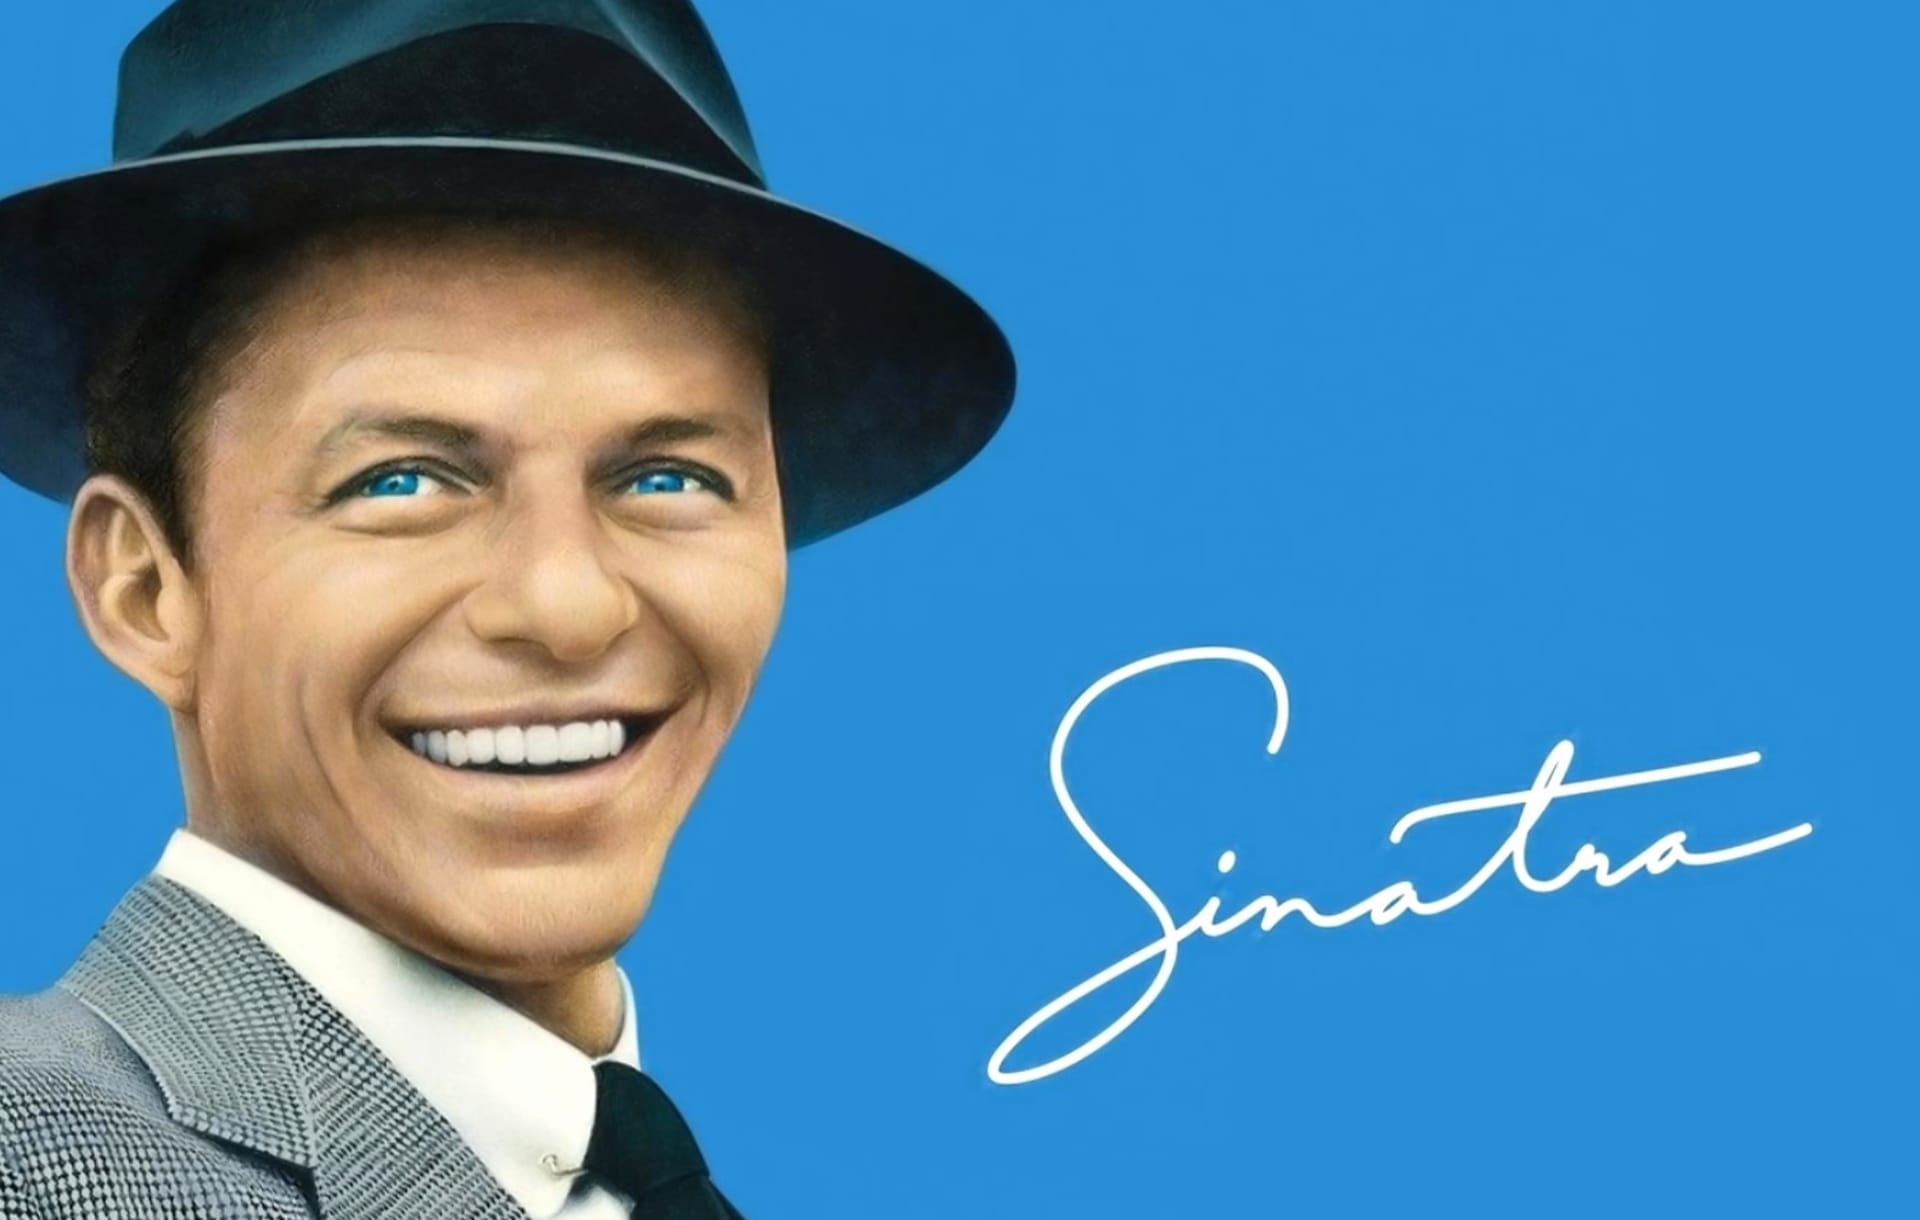 Frank Sinatra at 1024 x 1024 iPad size wallpapers HD quality